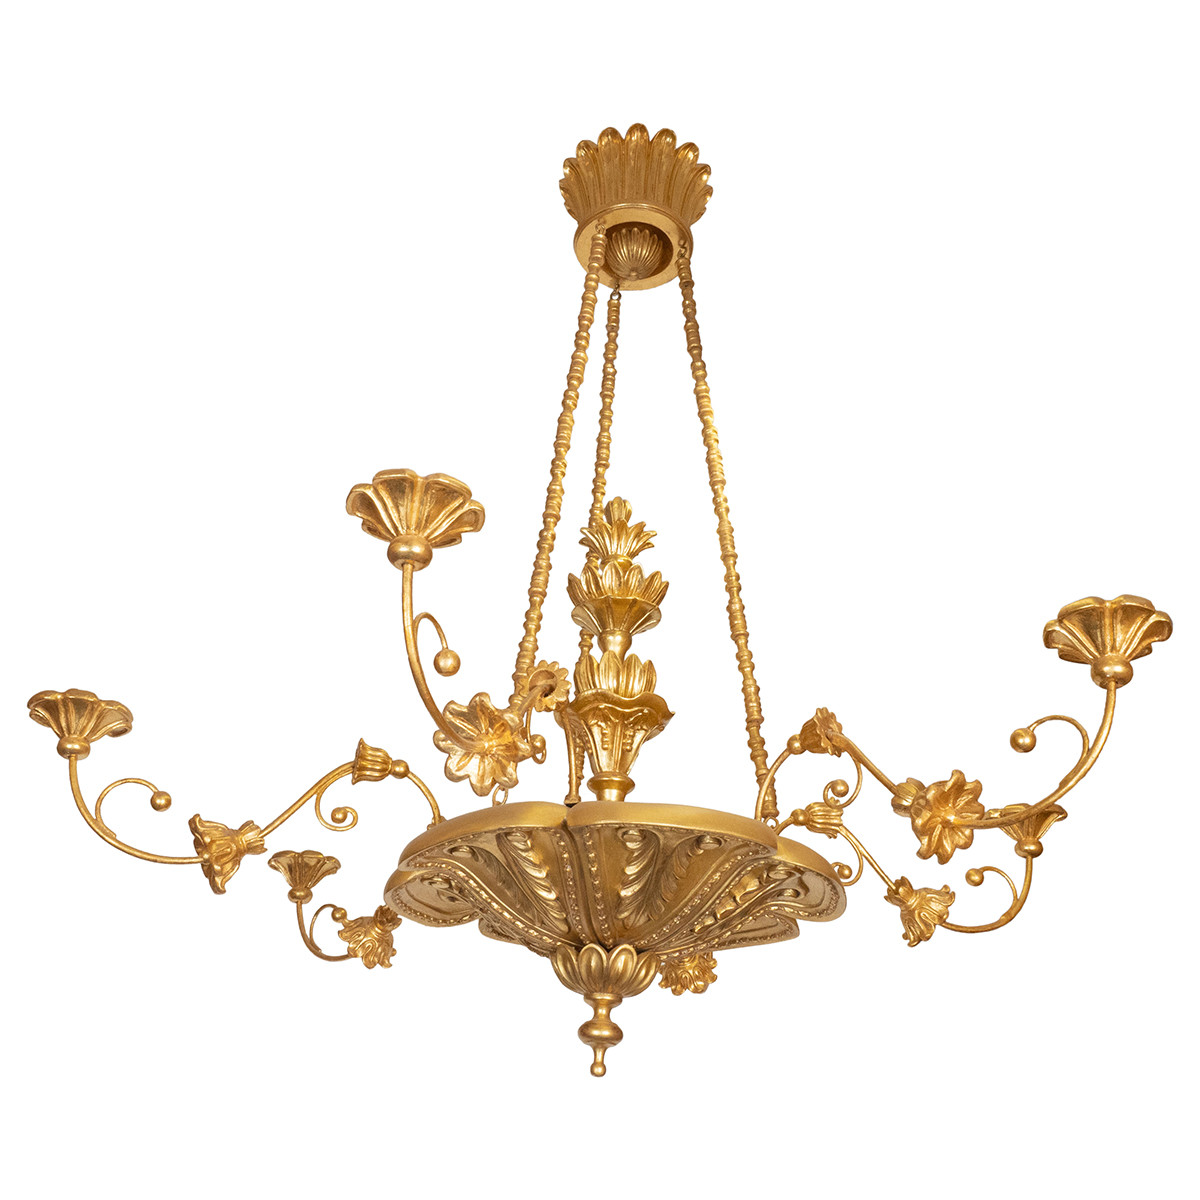 Giltwood foliate motif chandelier by Carlos Villegas